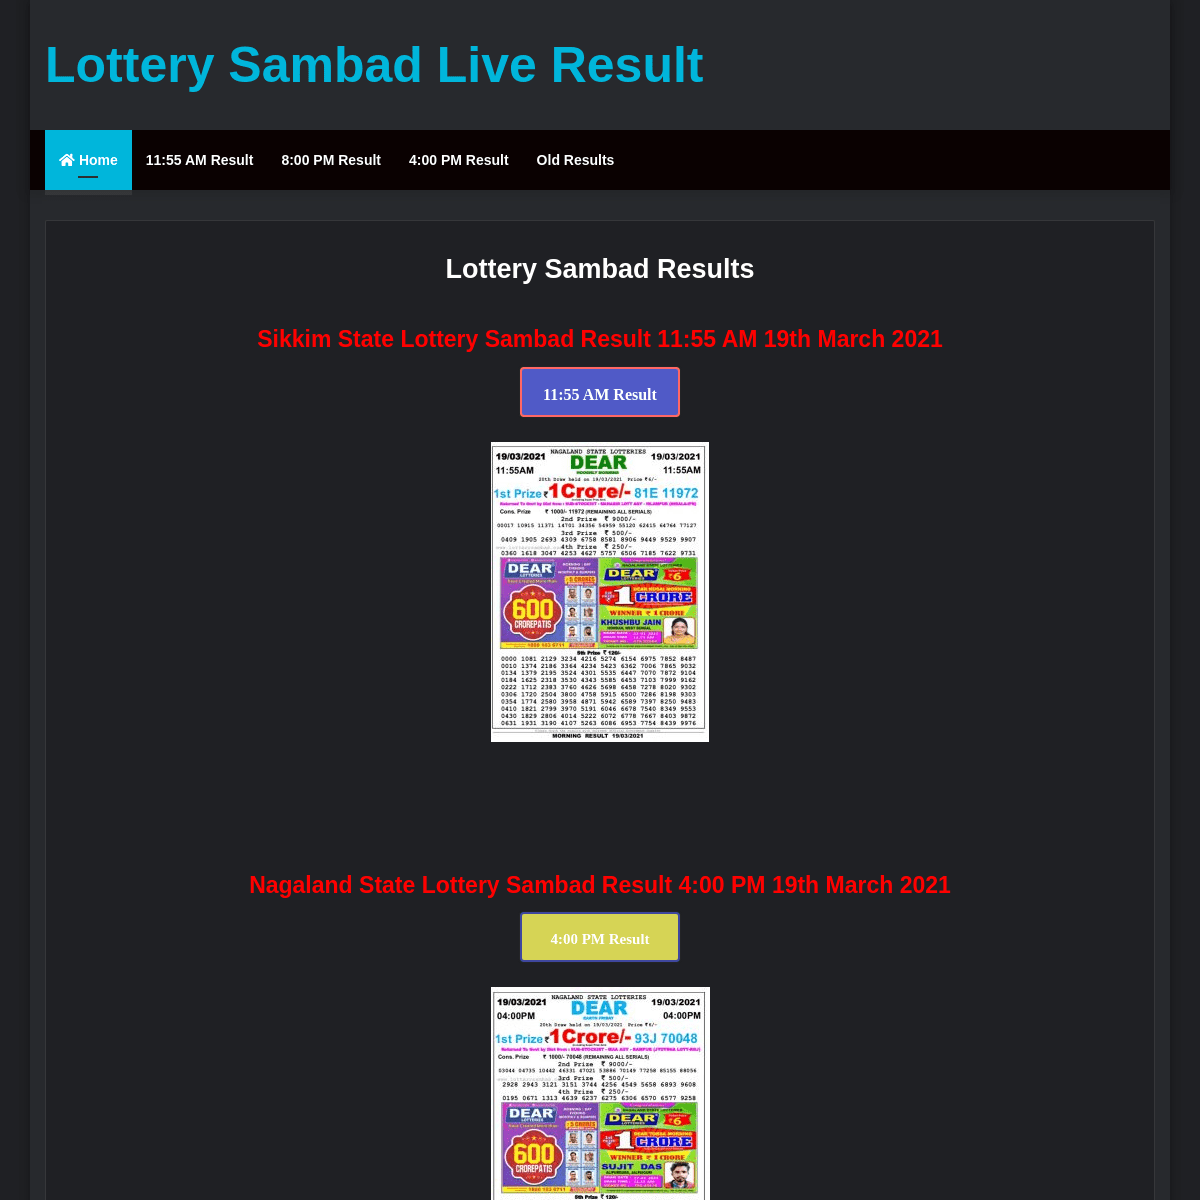 A complete backup of https://lotterysambadliveresult.in